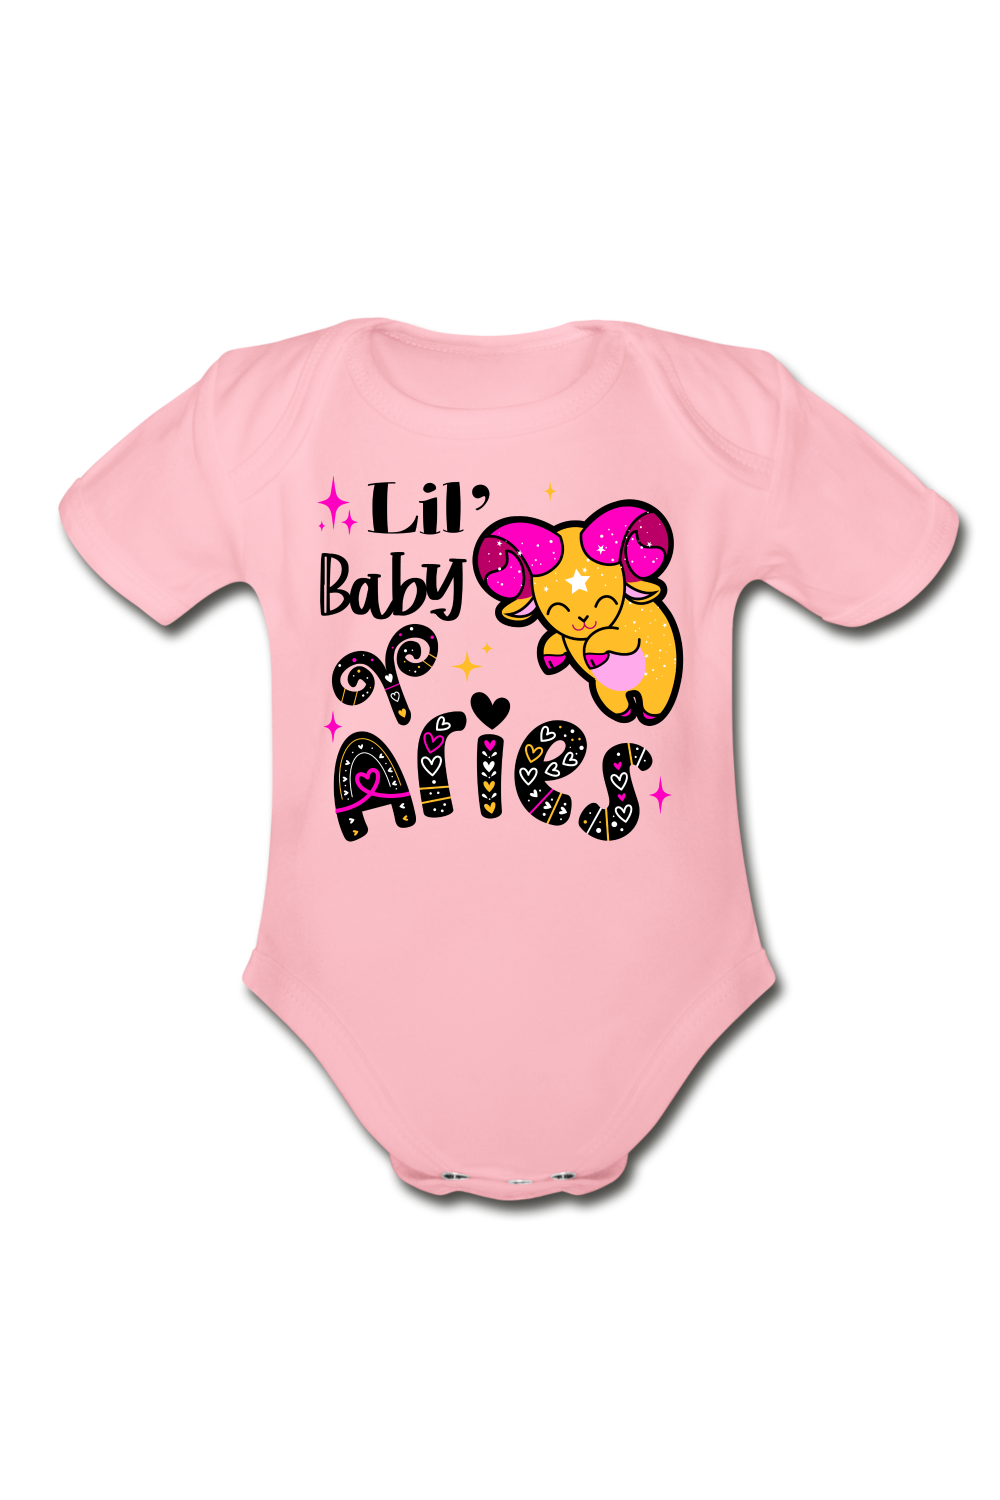 Unisex Baby Short Sleeve Baby Bodysuit - light pink - NicholesGifts.online